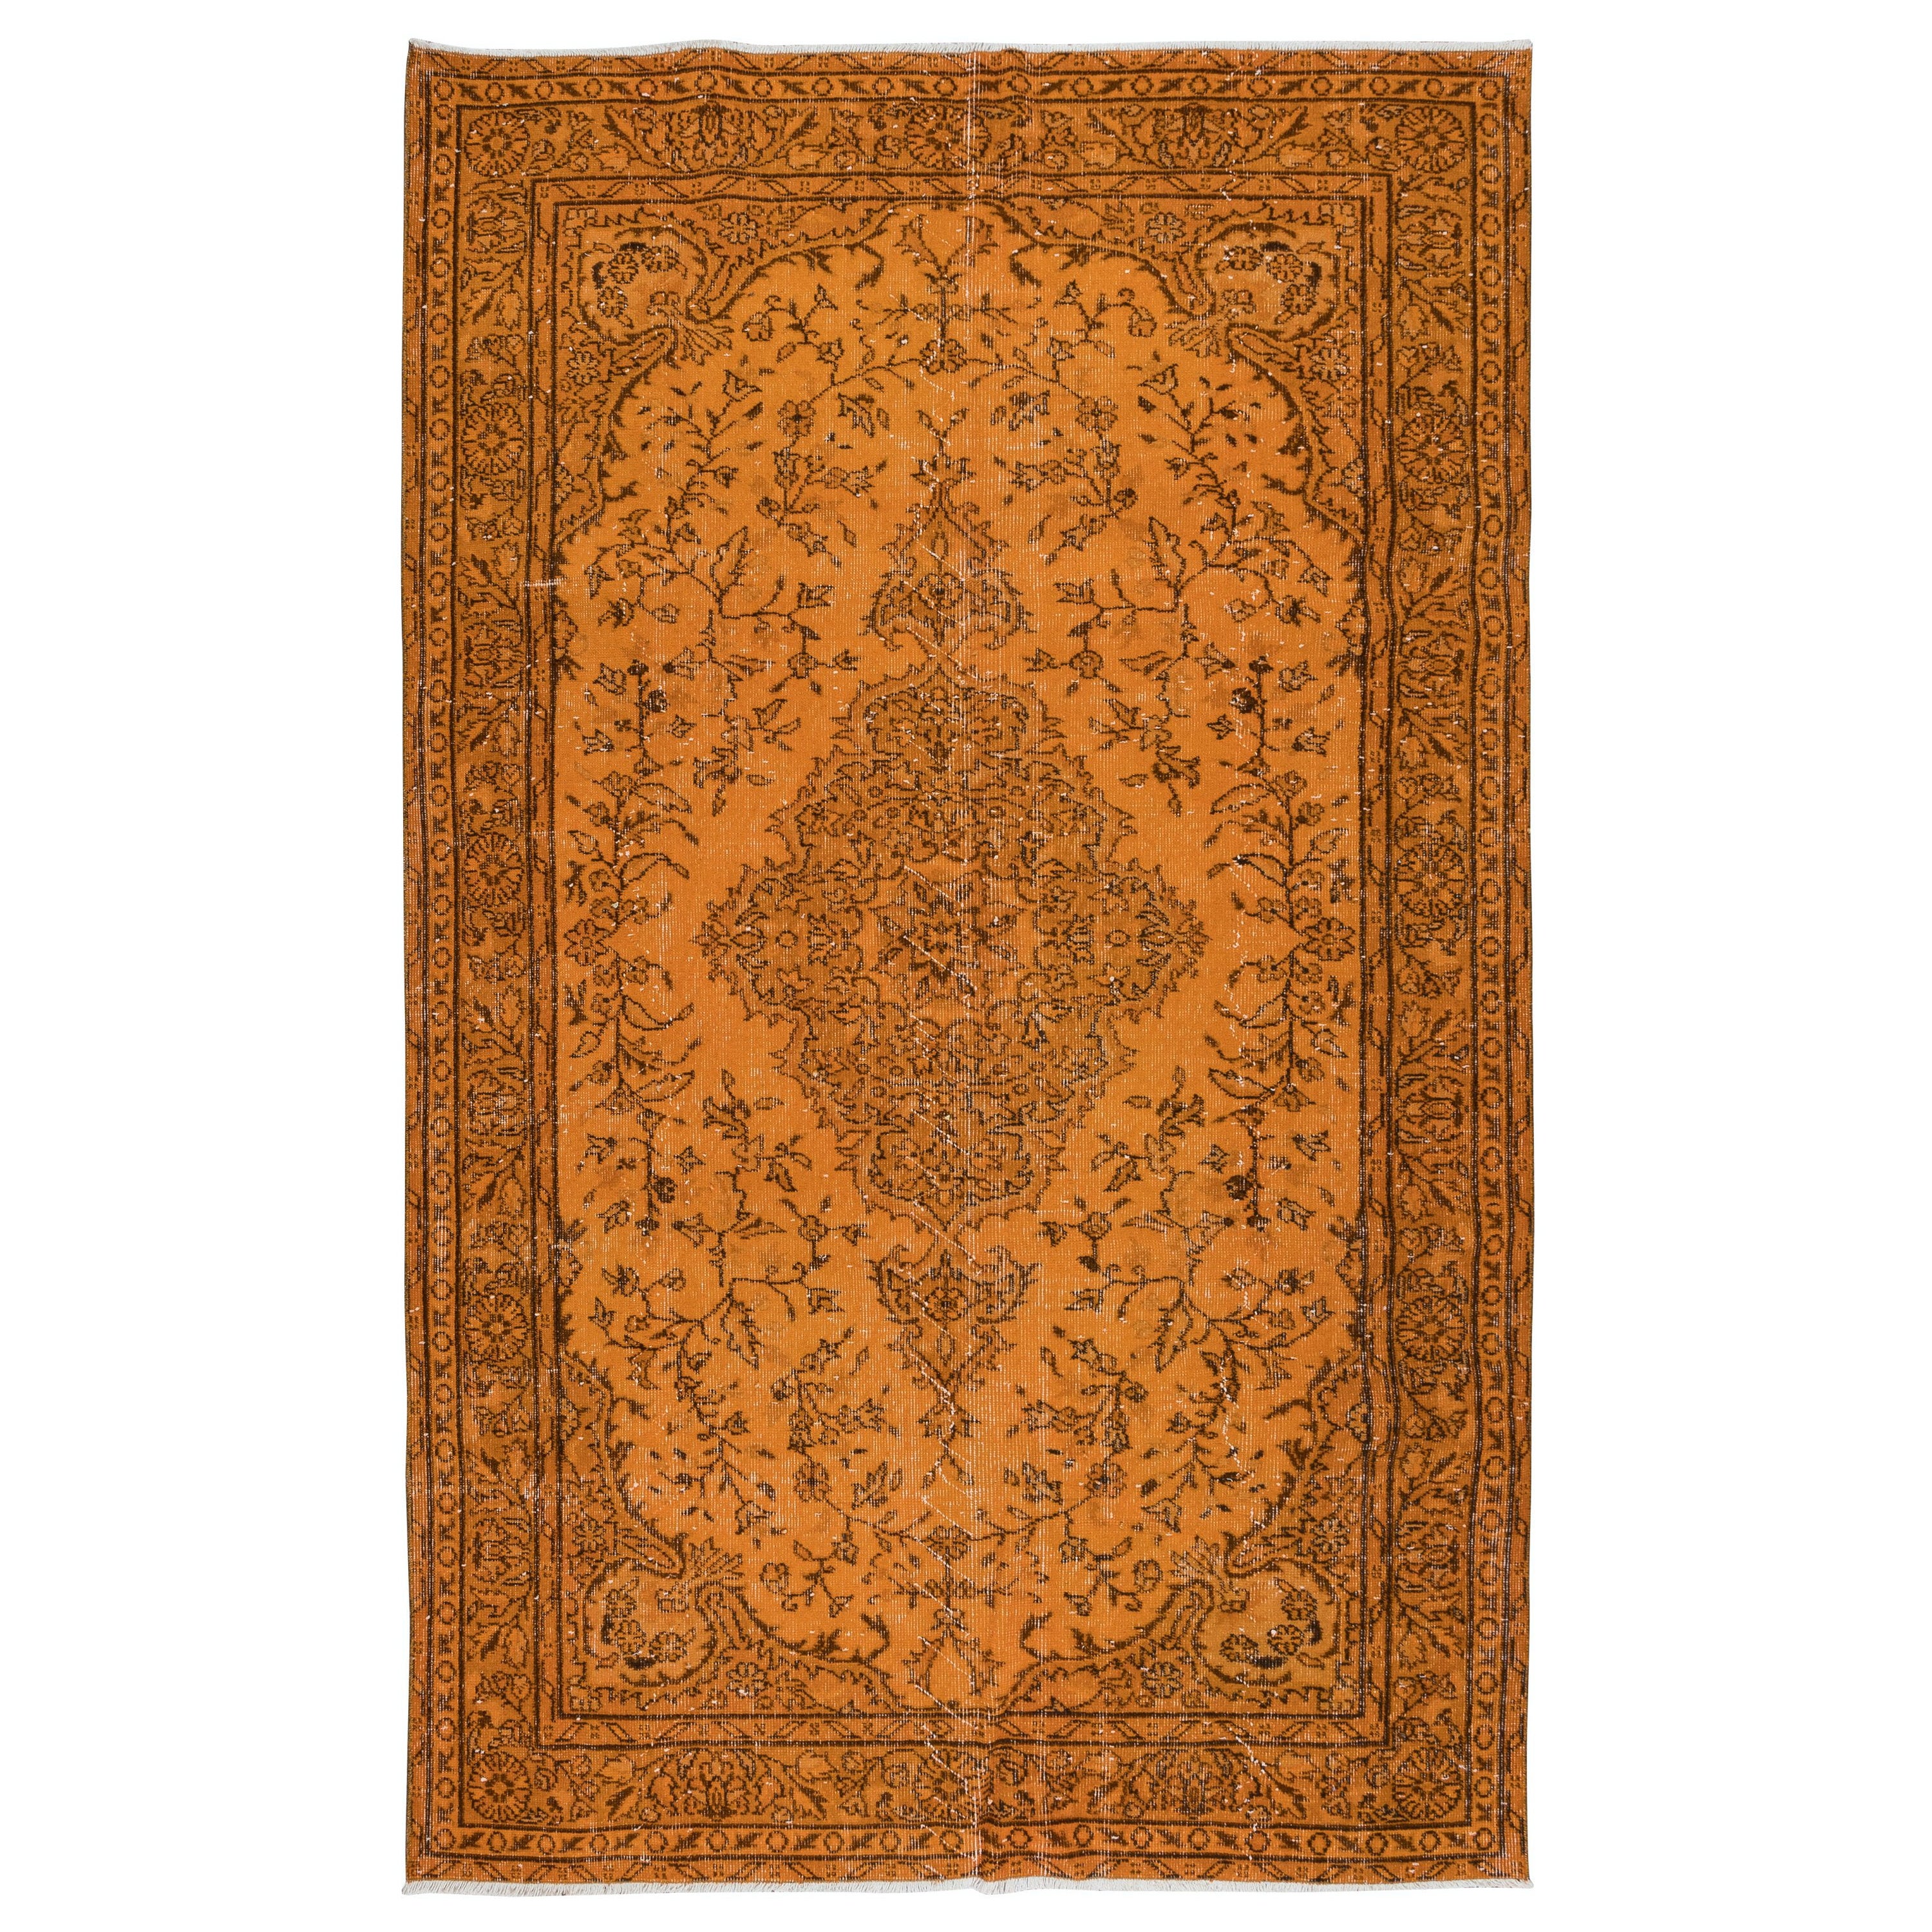 5.7x9 Ft Decorative Turkish Orange Rug, Modern Handmade Wool Carpet